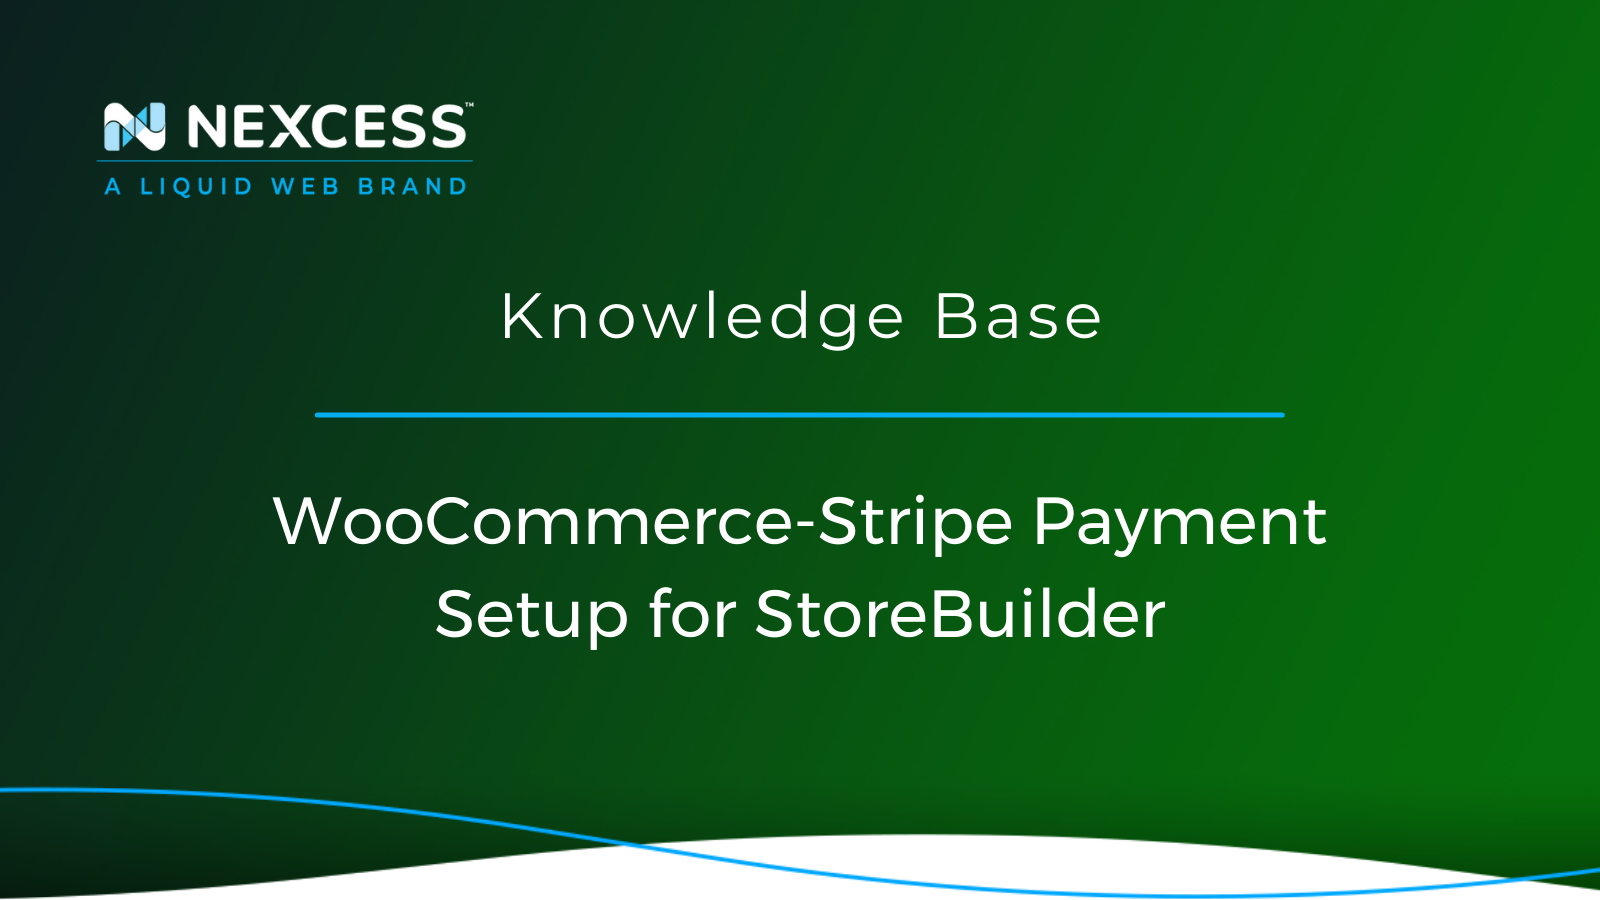 WooCommerce-Stripe Payment Setup for StoreBuilder